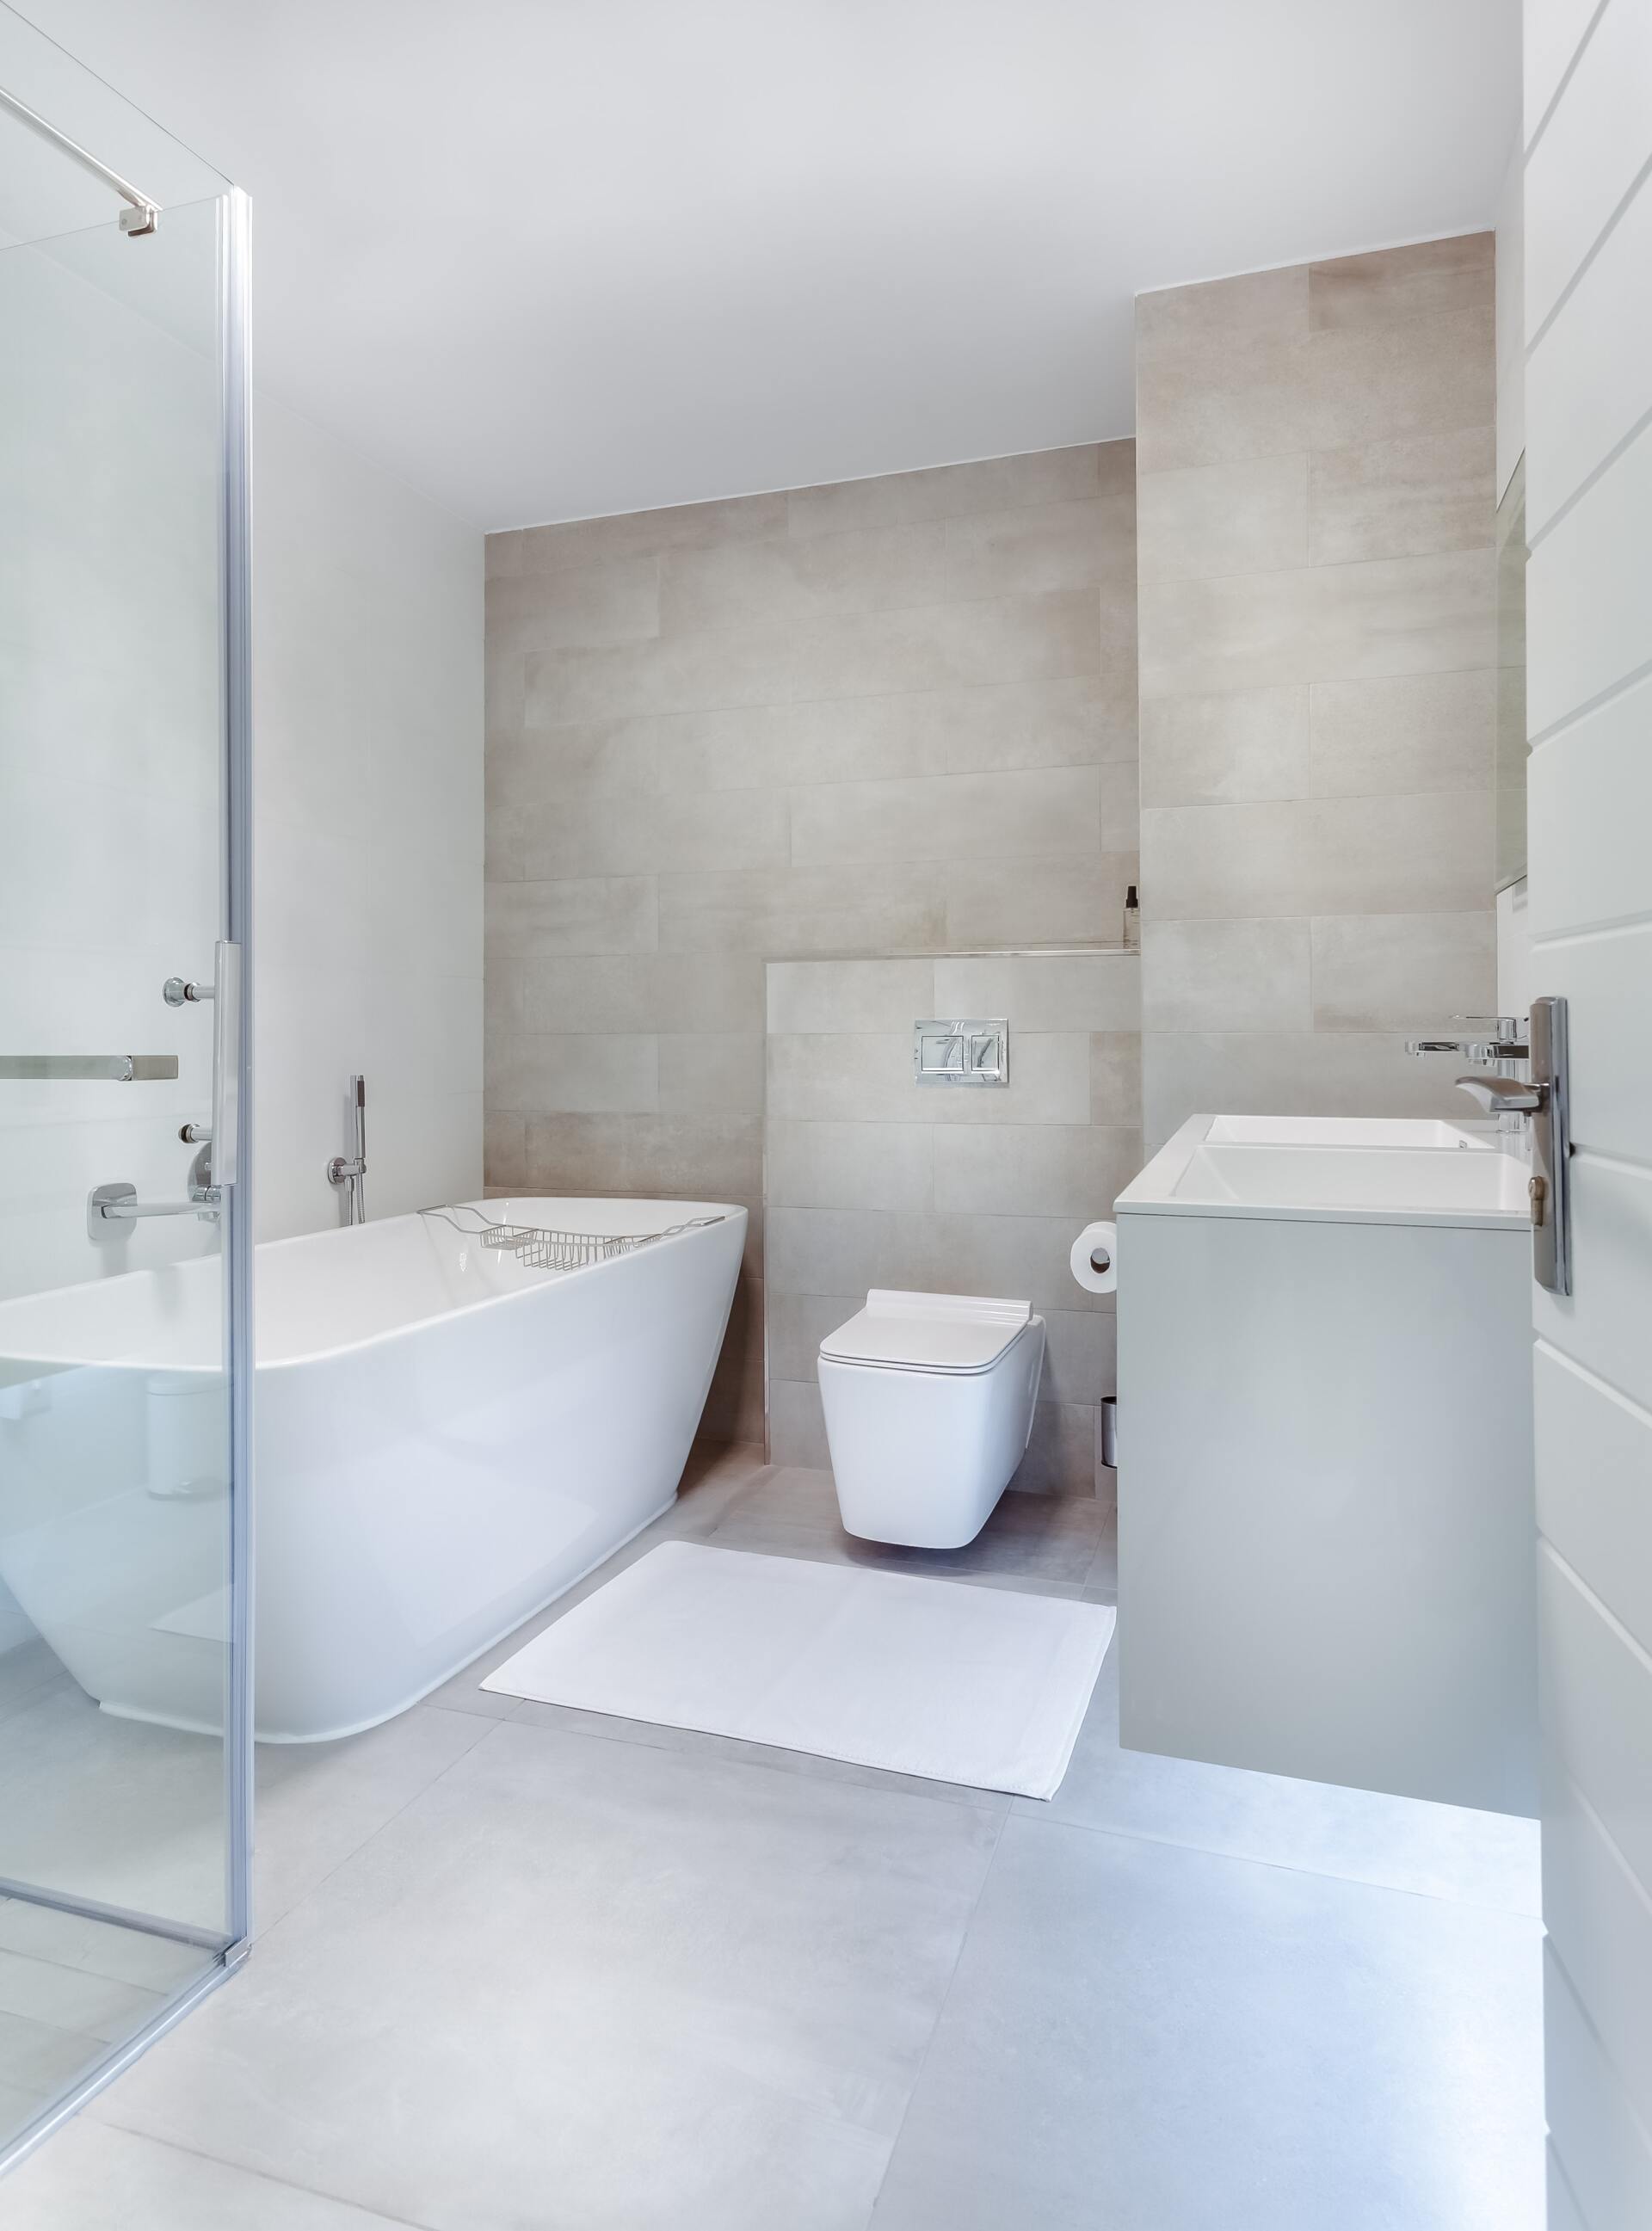 minimalist bathroom interior with squared bathtub, toilet, and sink